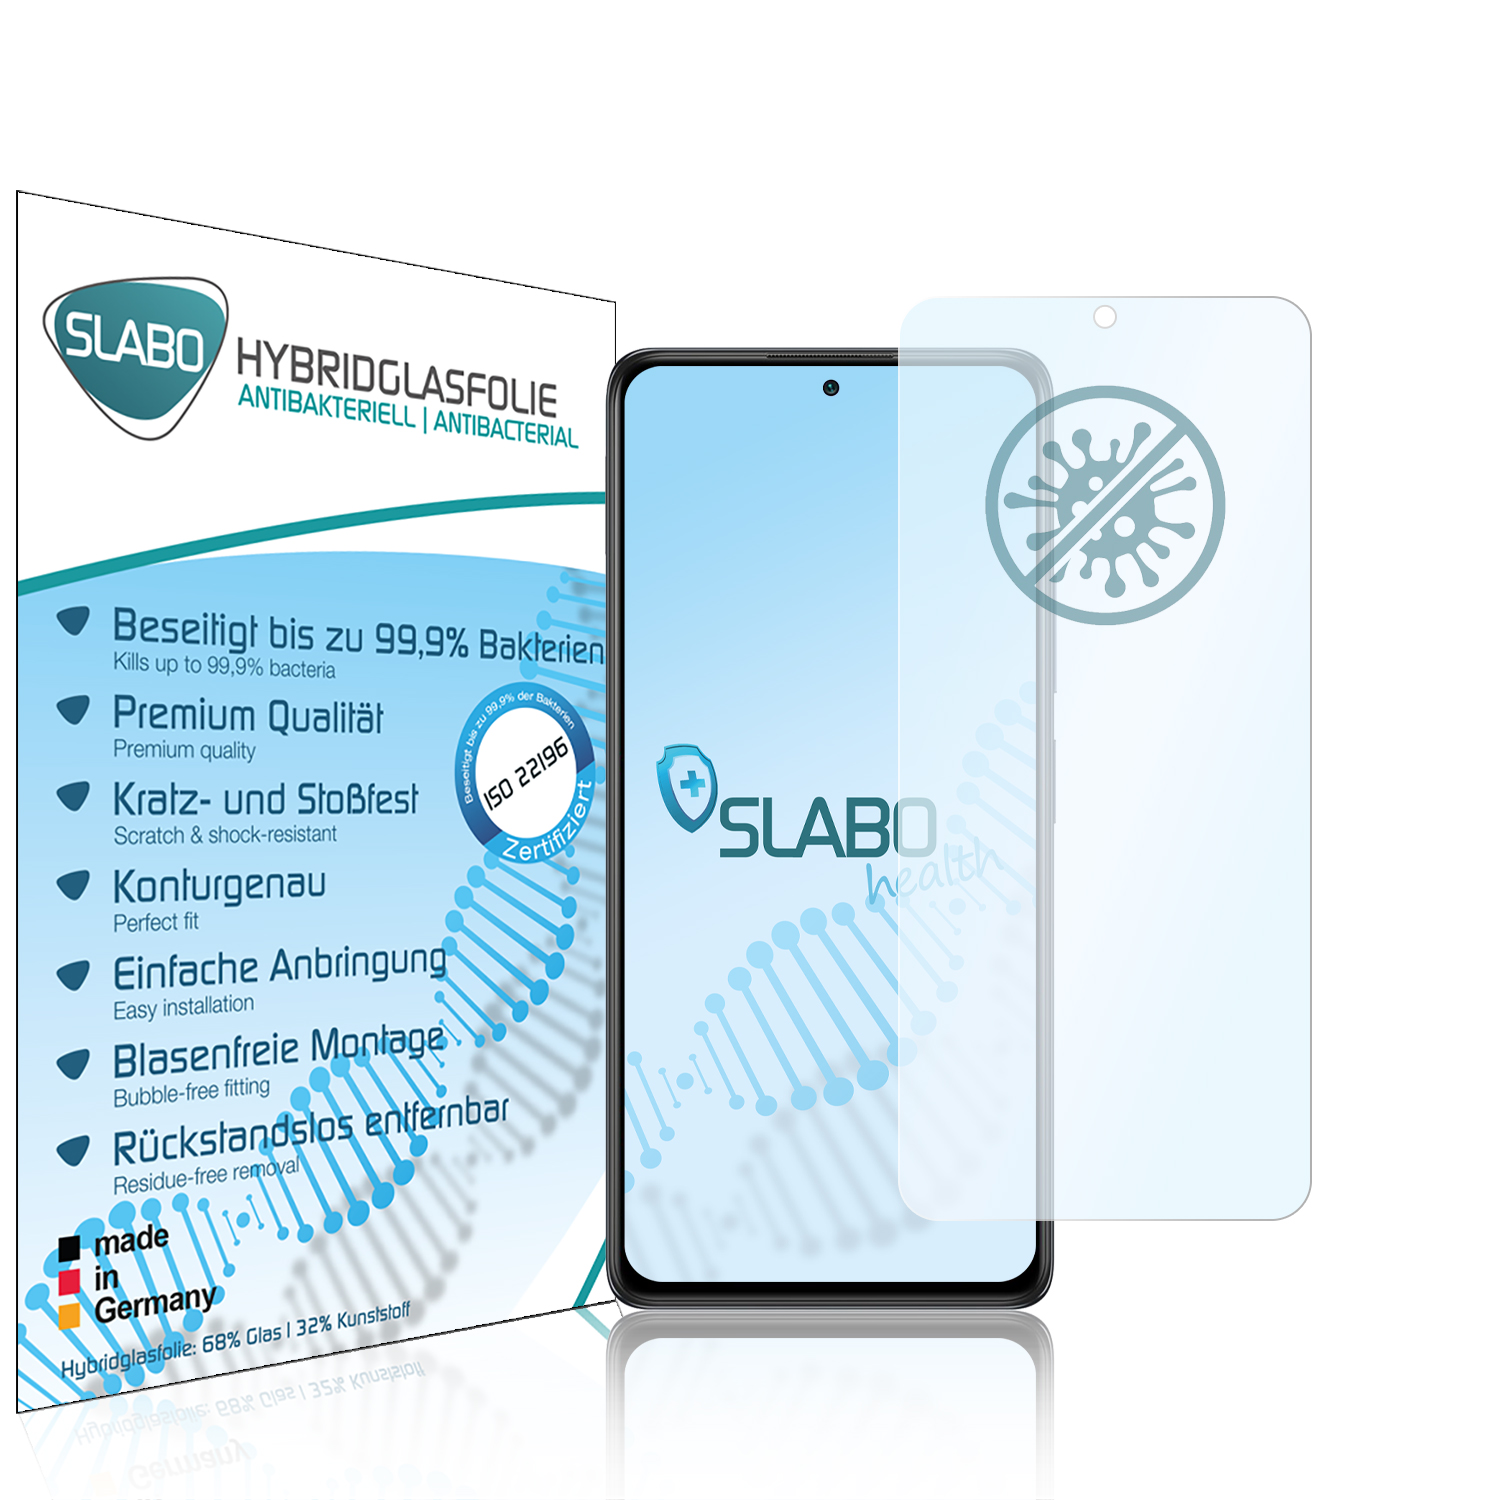 SLABO antibakterielle flexible Hybridglasfolie 10 Redmi (6,43\